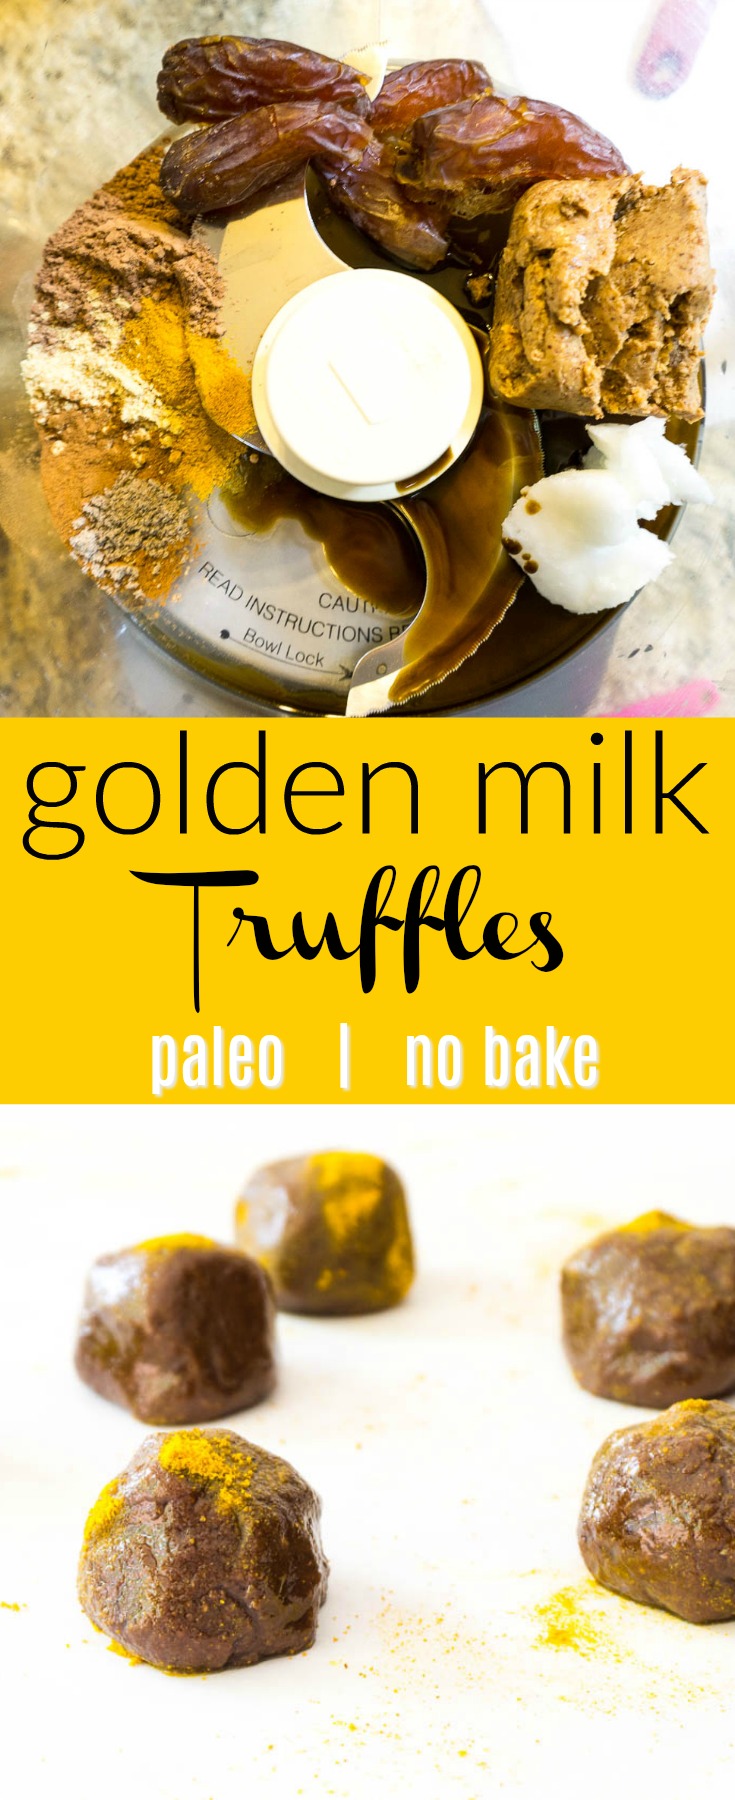 paleo chocolate truffles with golden milk